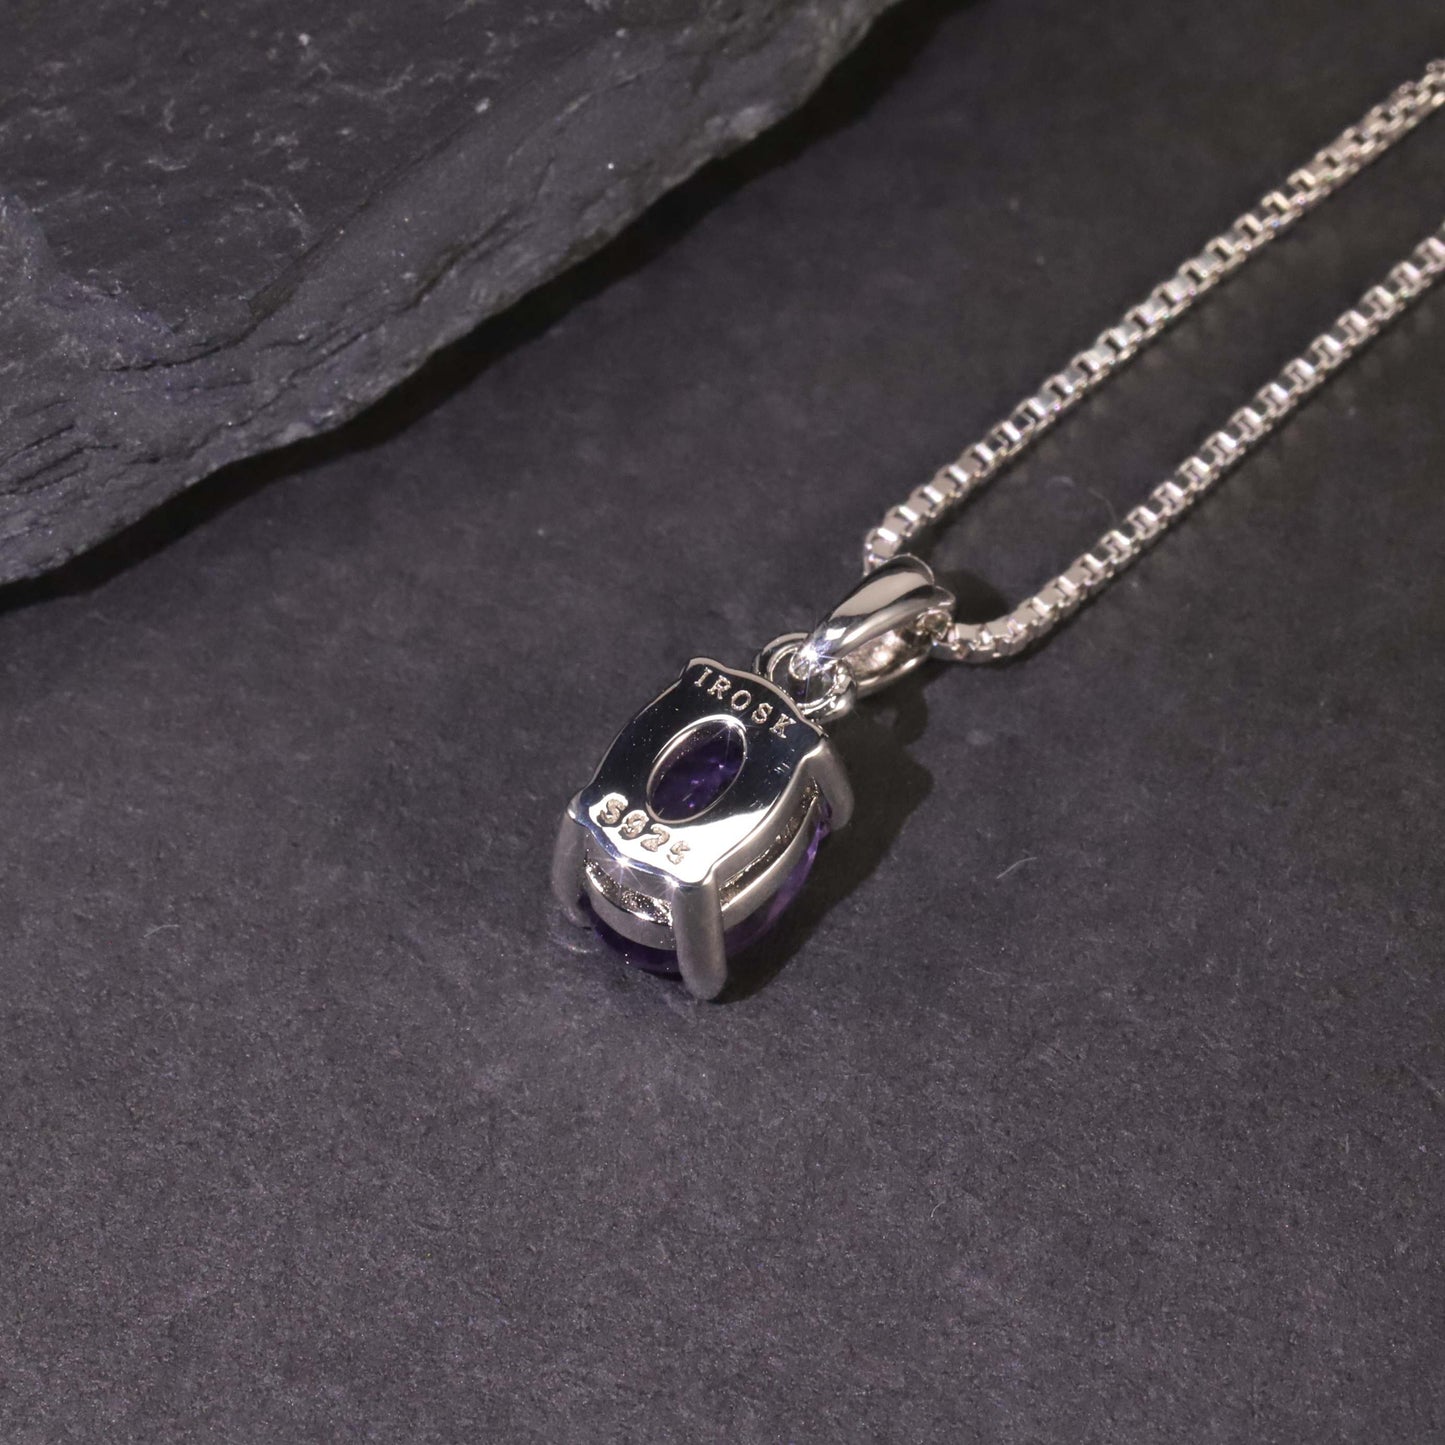 Irosk Oval Cut Necklace in Sterling Silver -  Amethyst